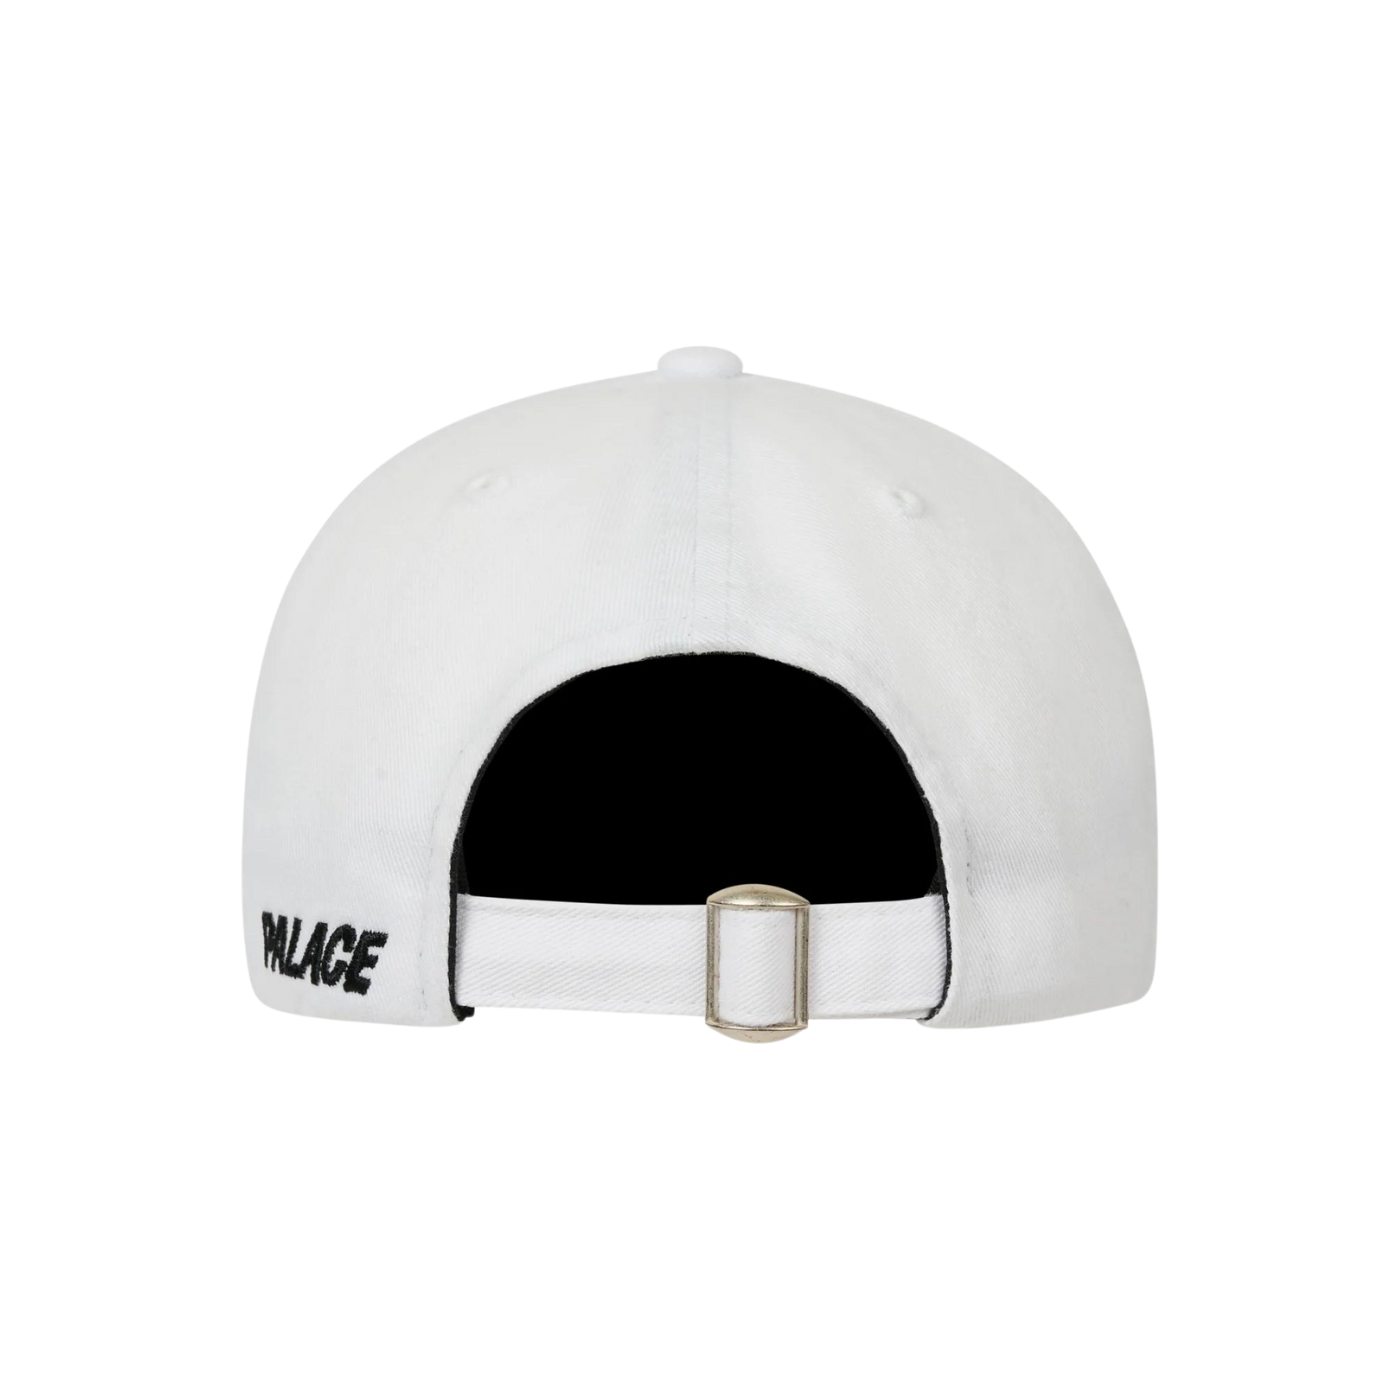 Boné Palace P Hat White